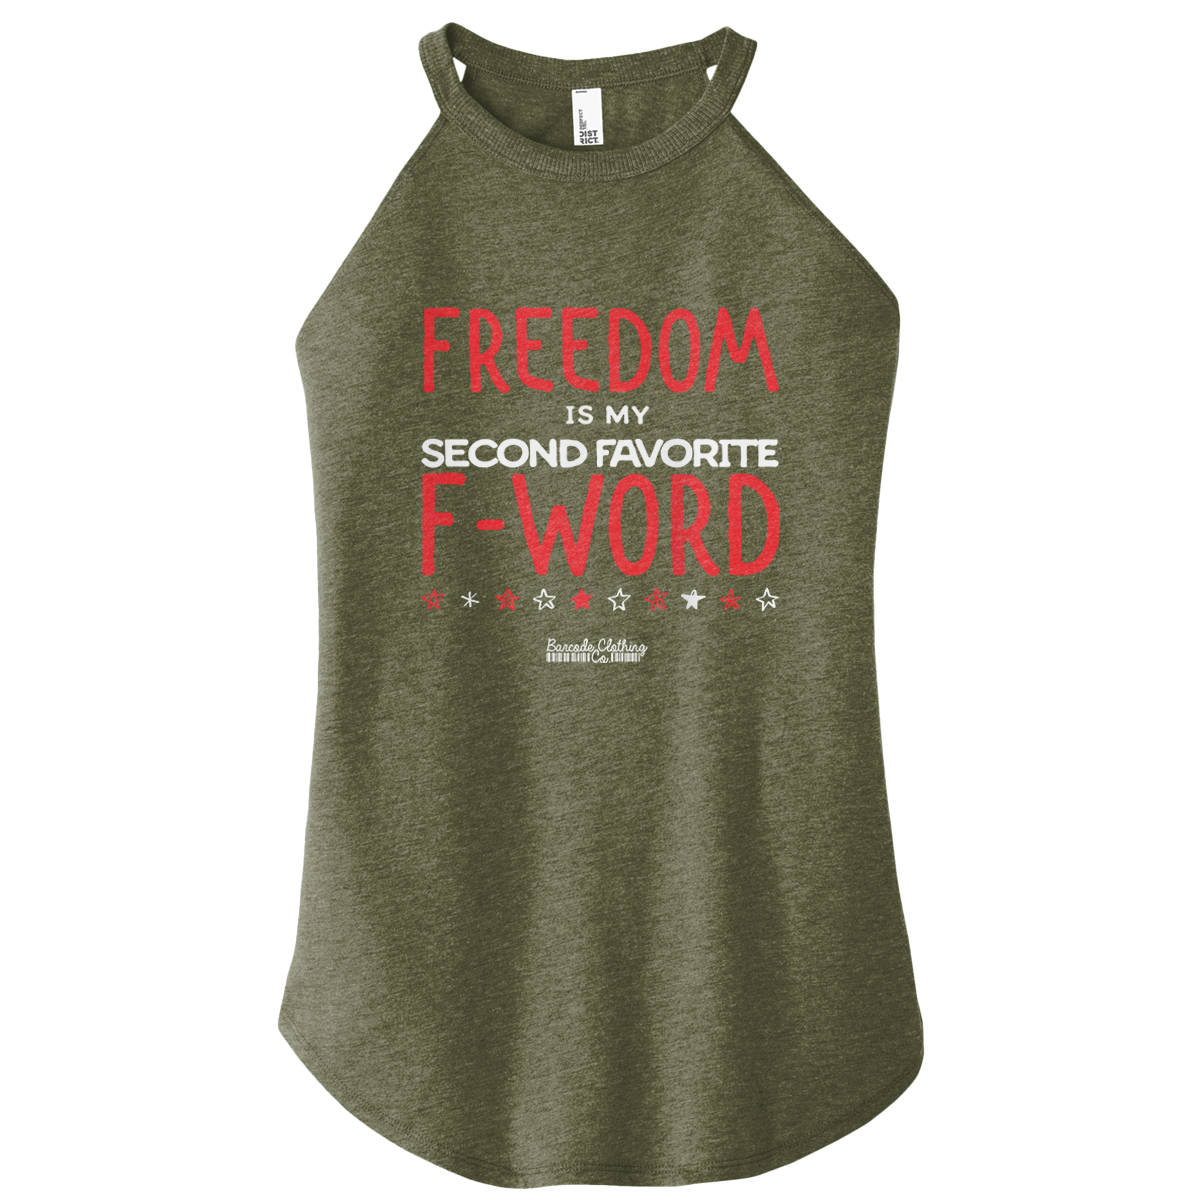 Freedom F-Word Color Rocker Tank